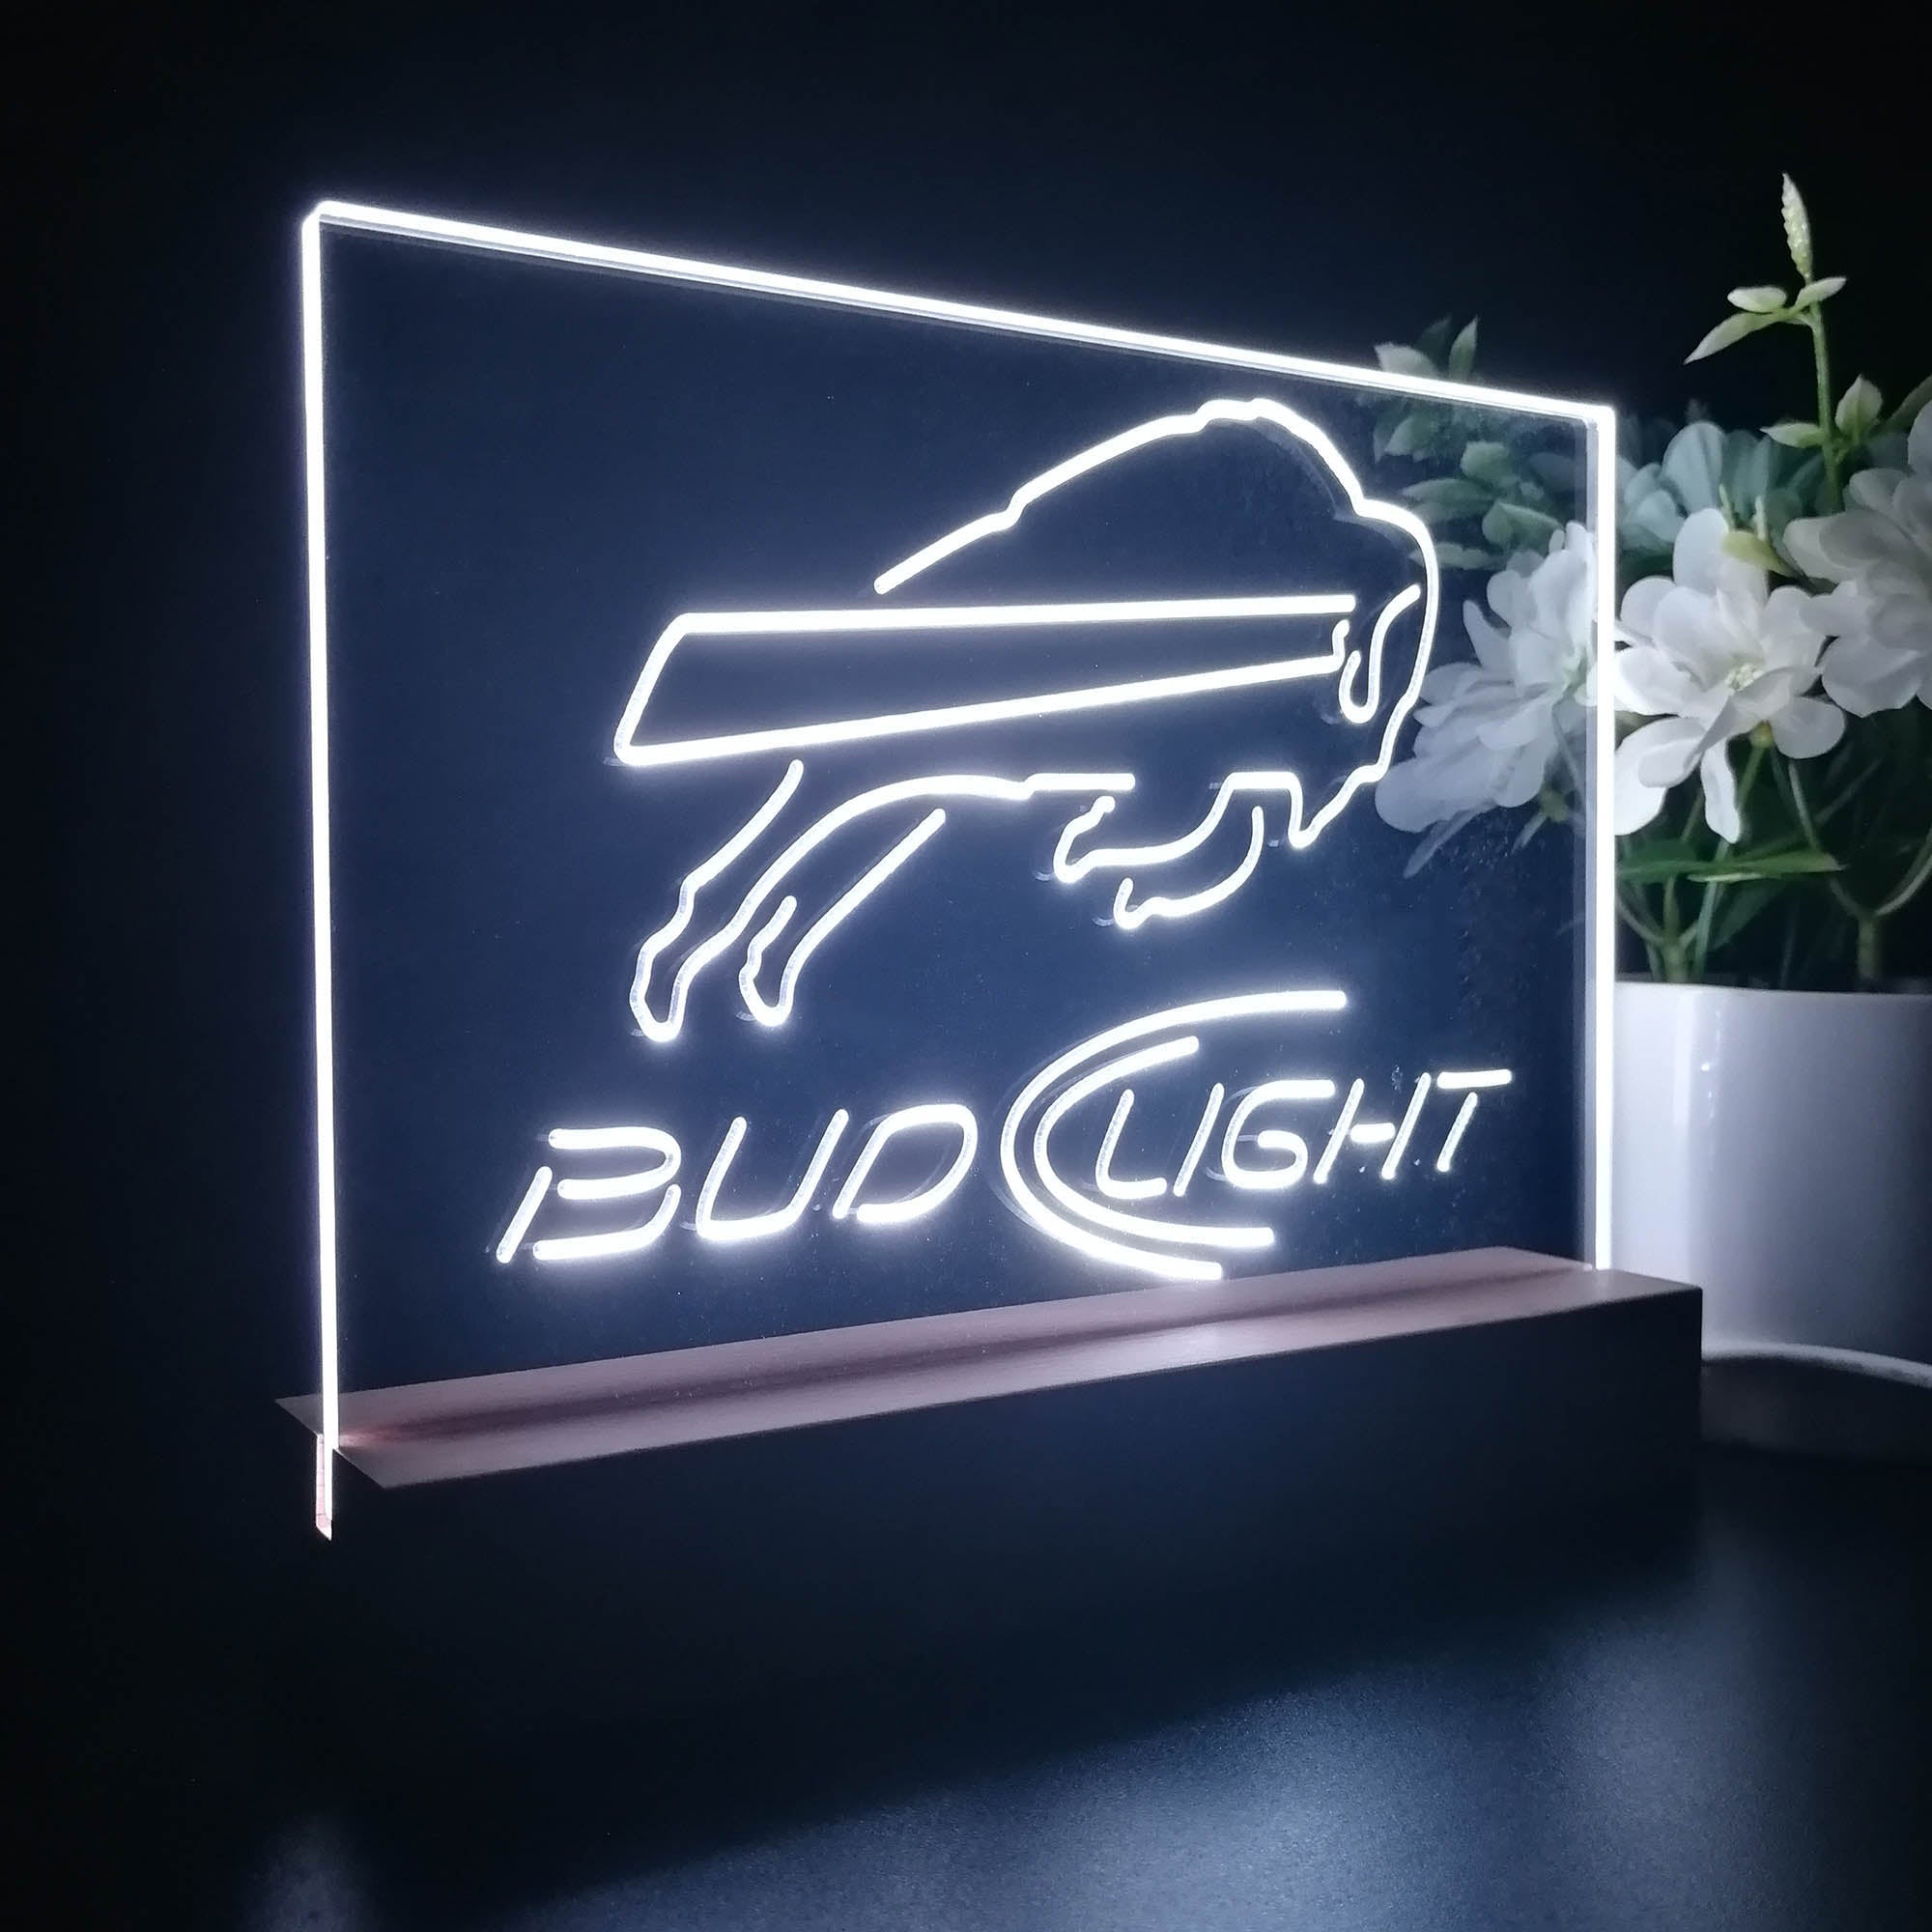 Buffalo Bills Bud Light Night Light LED Sign